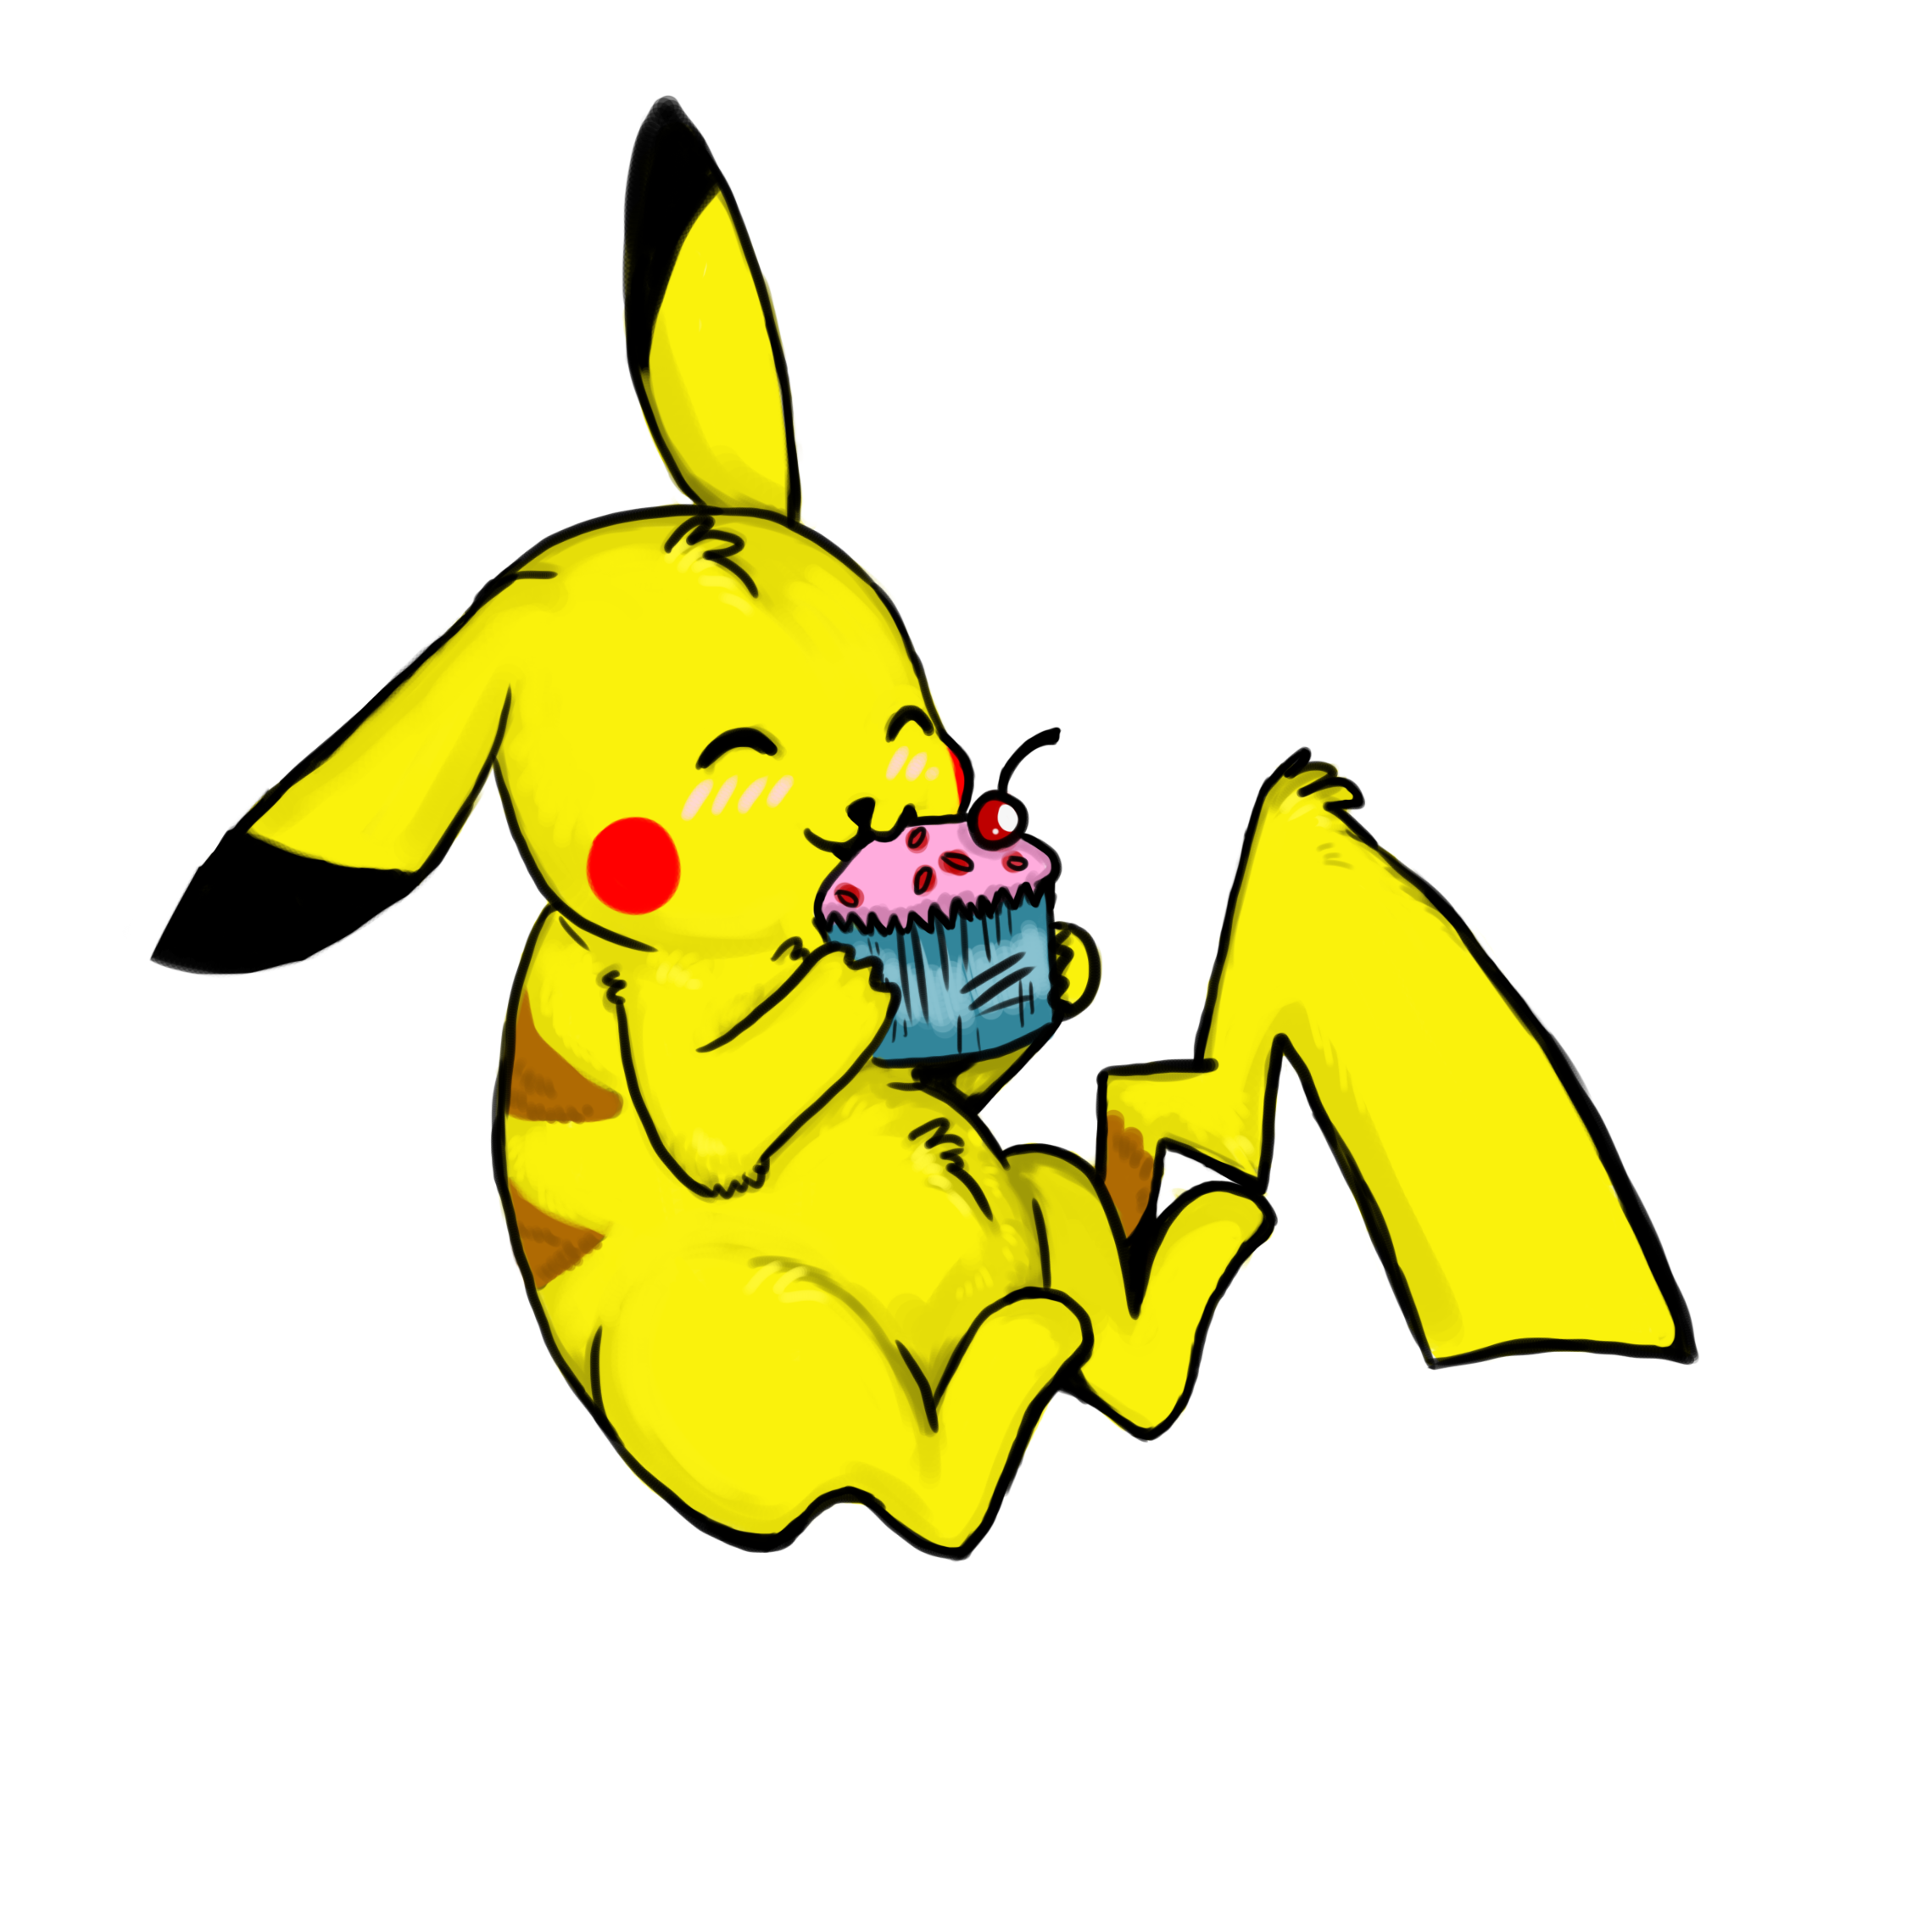 Servicio Encantador Emigrar Pikachu Eating a Cupcake by Sekhmettt on DeviantArt